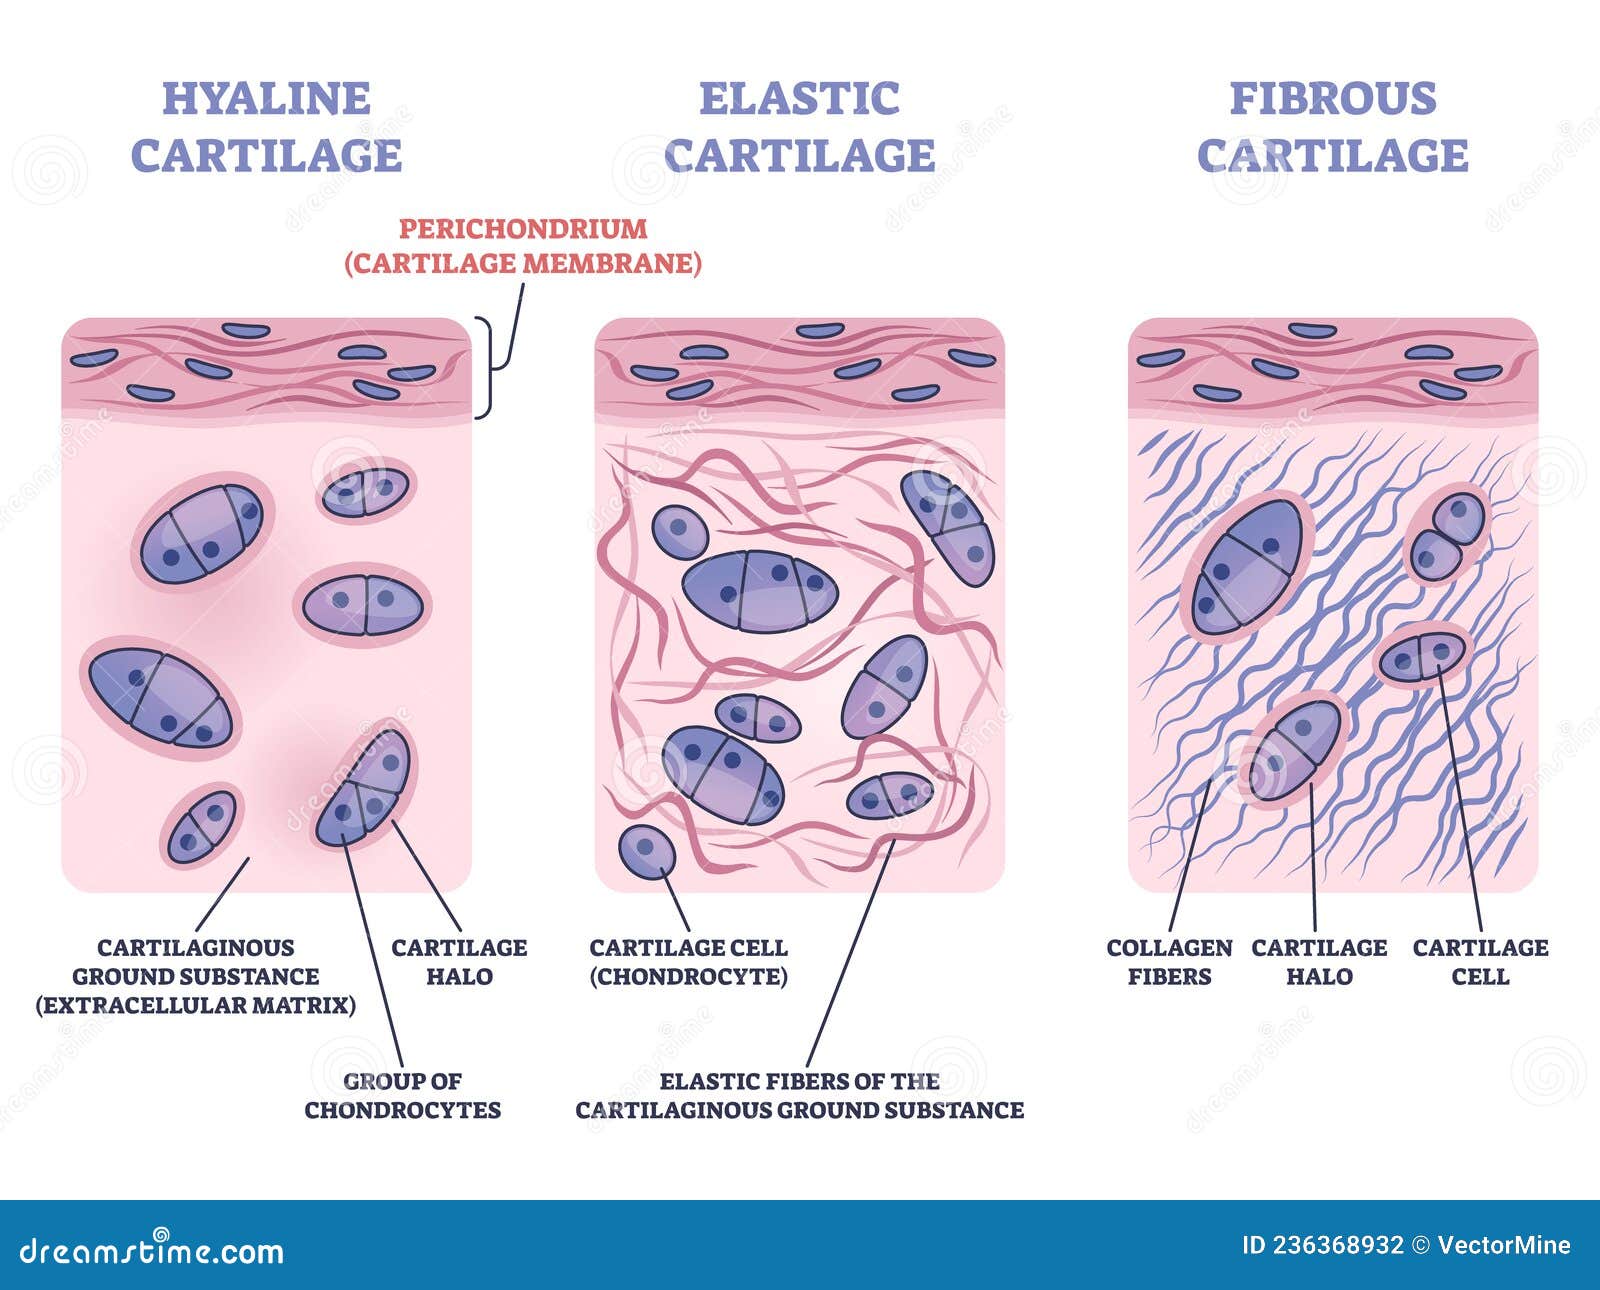 perichondrium as hyaline and elastic cartilage membrane outline diagram